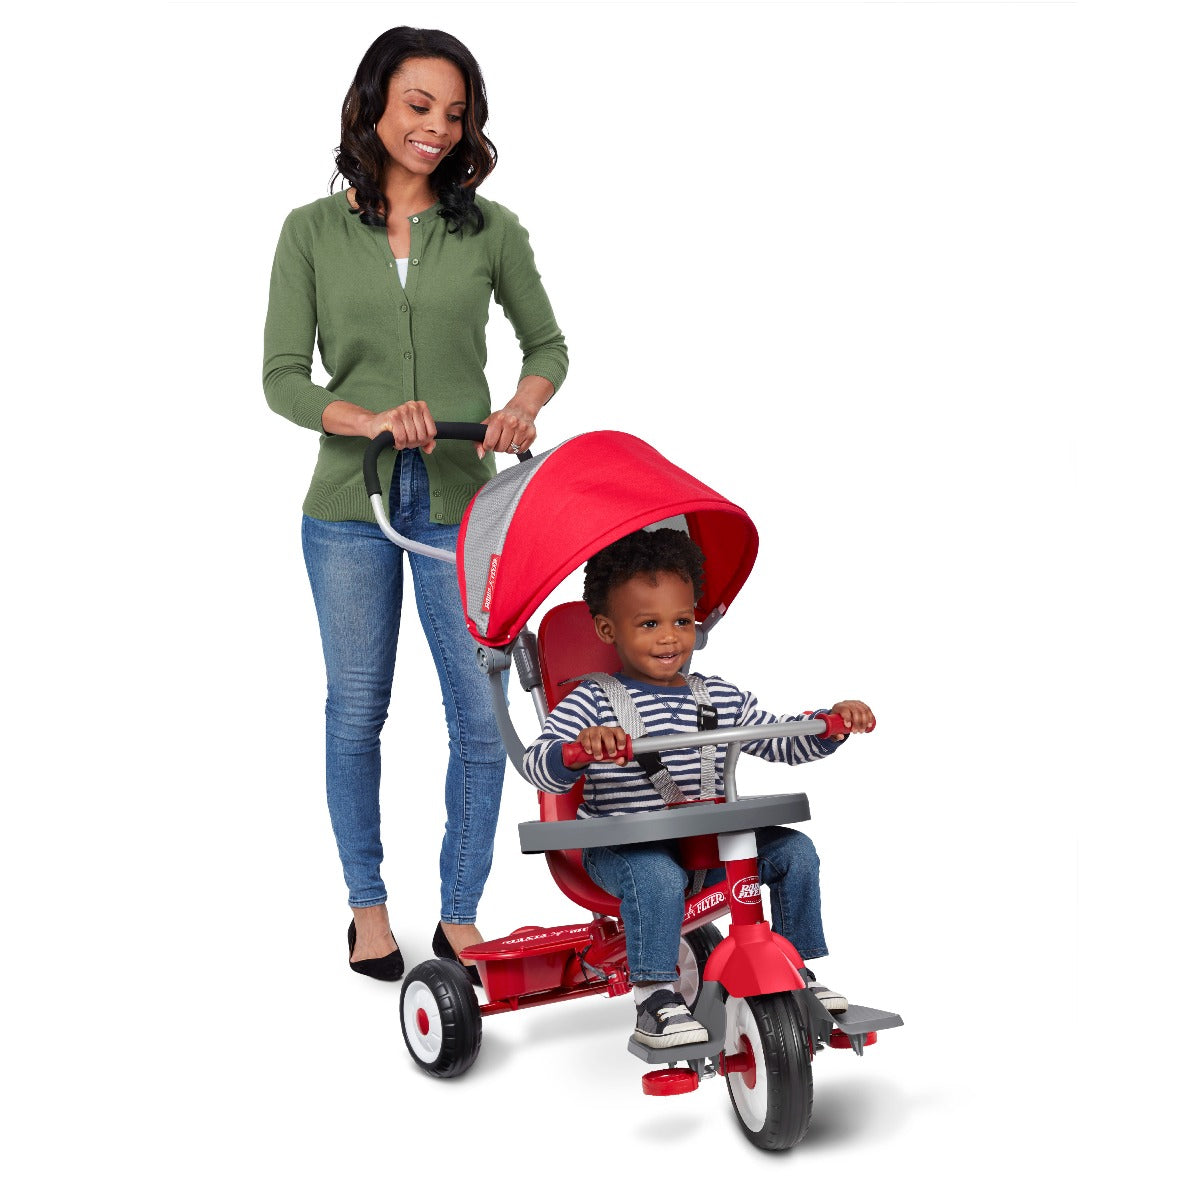 Woman Pushing Boy Riding 4-in-1 Stroll 'N Trike® in Infant Trike Mode